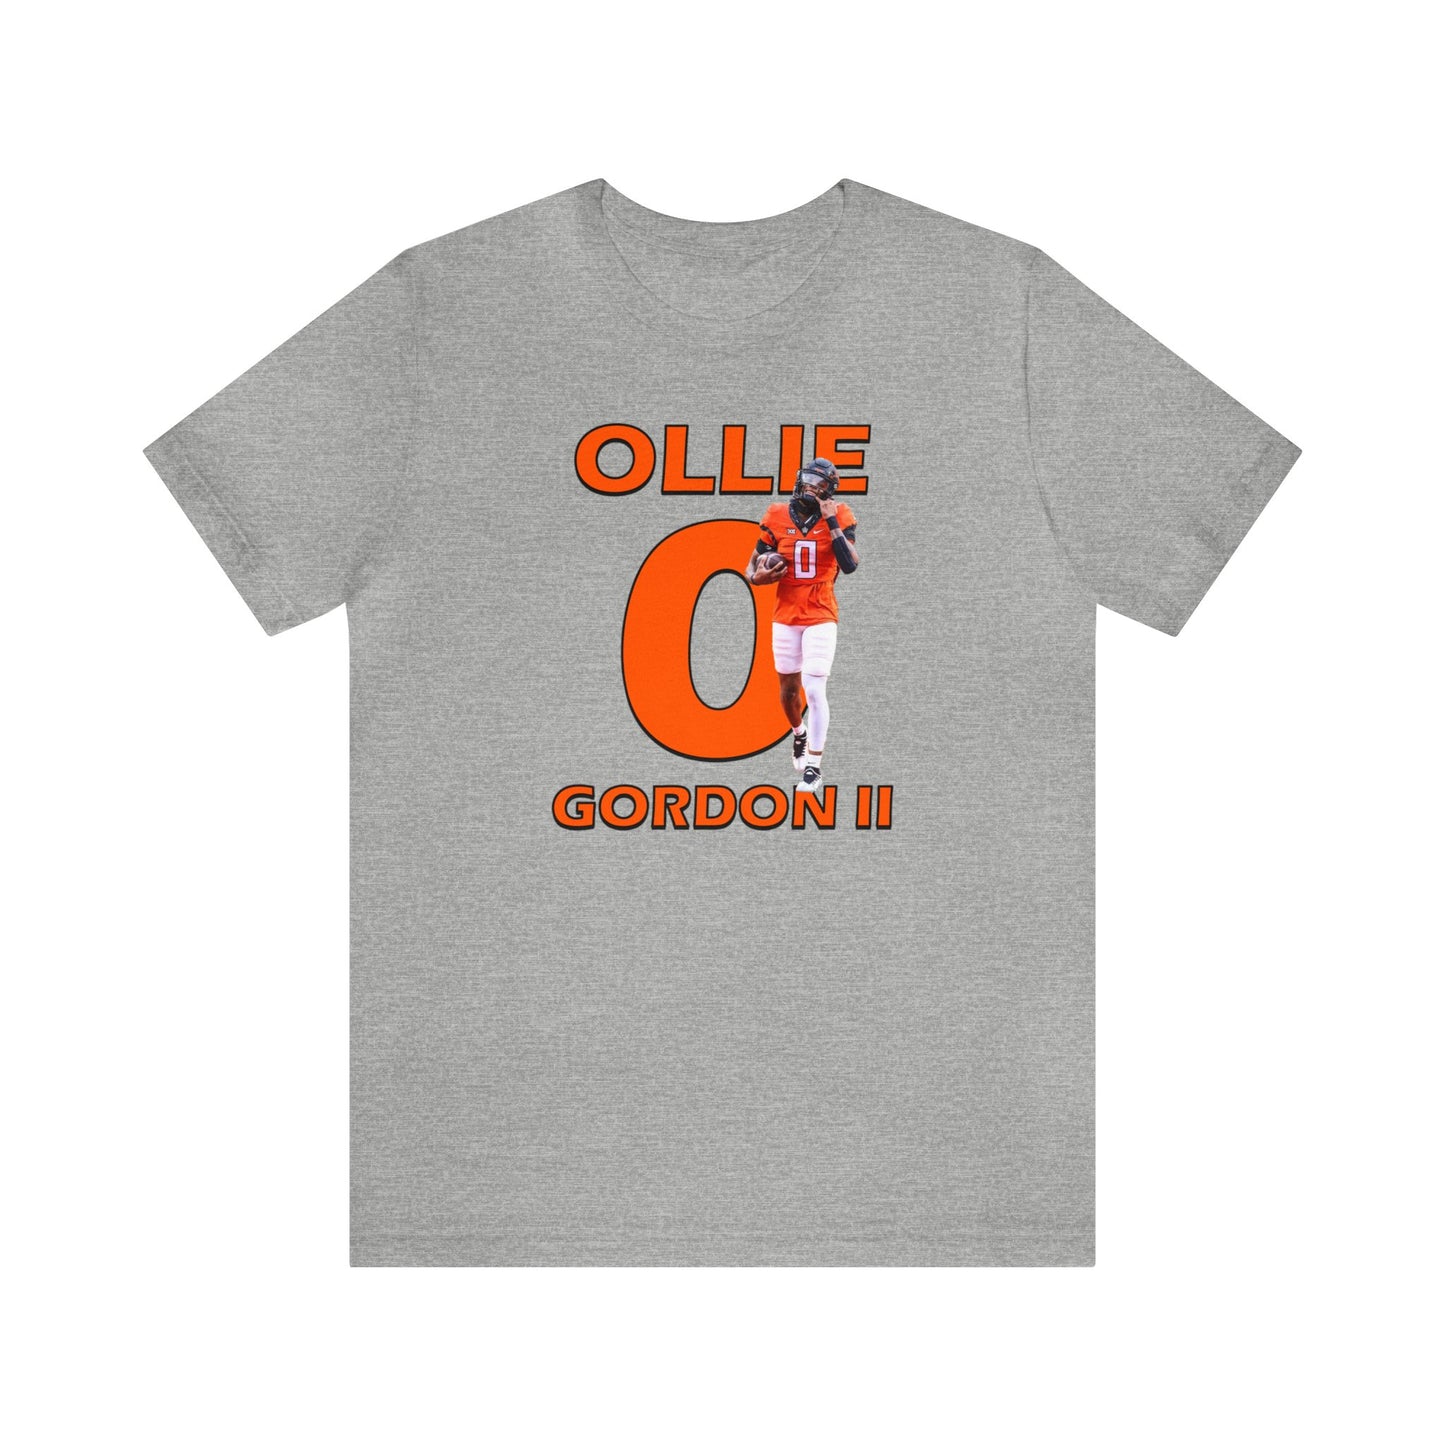 Ollie Gordon II Graphic T-Shirt